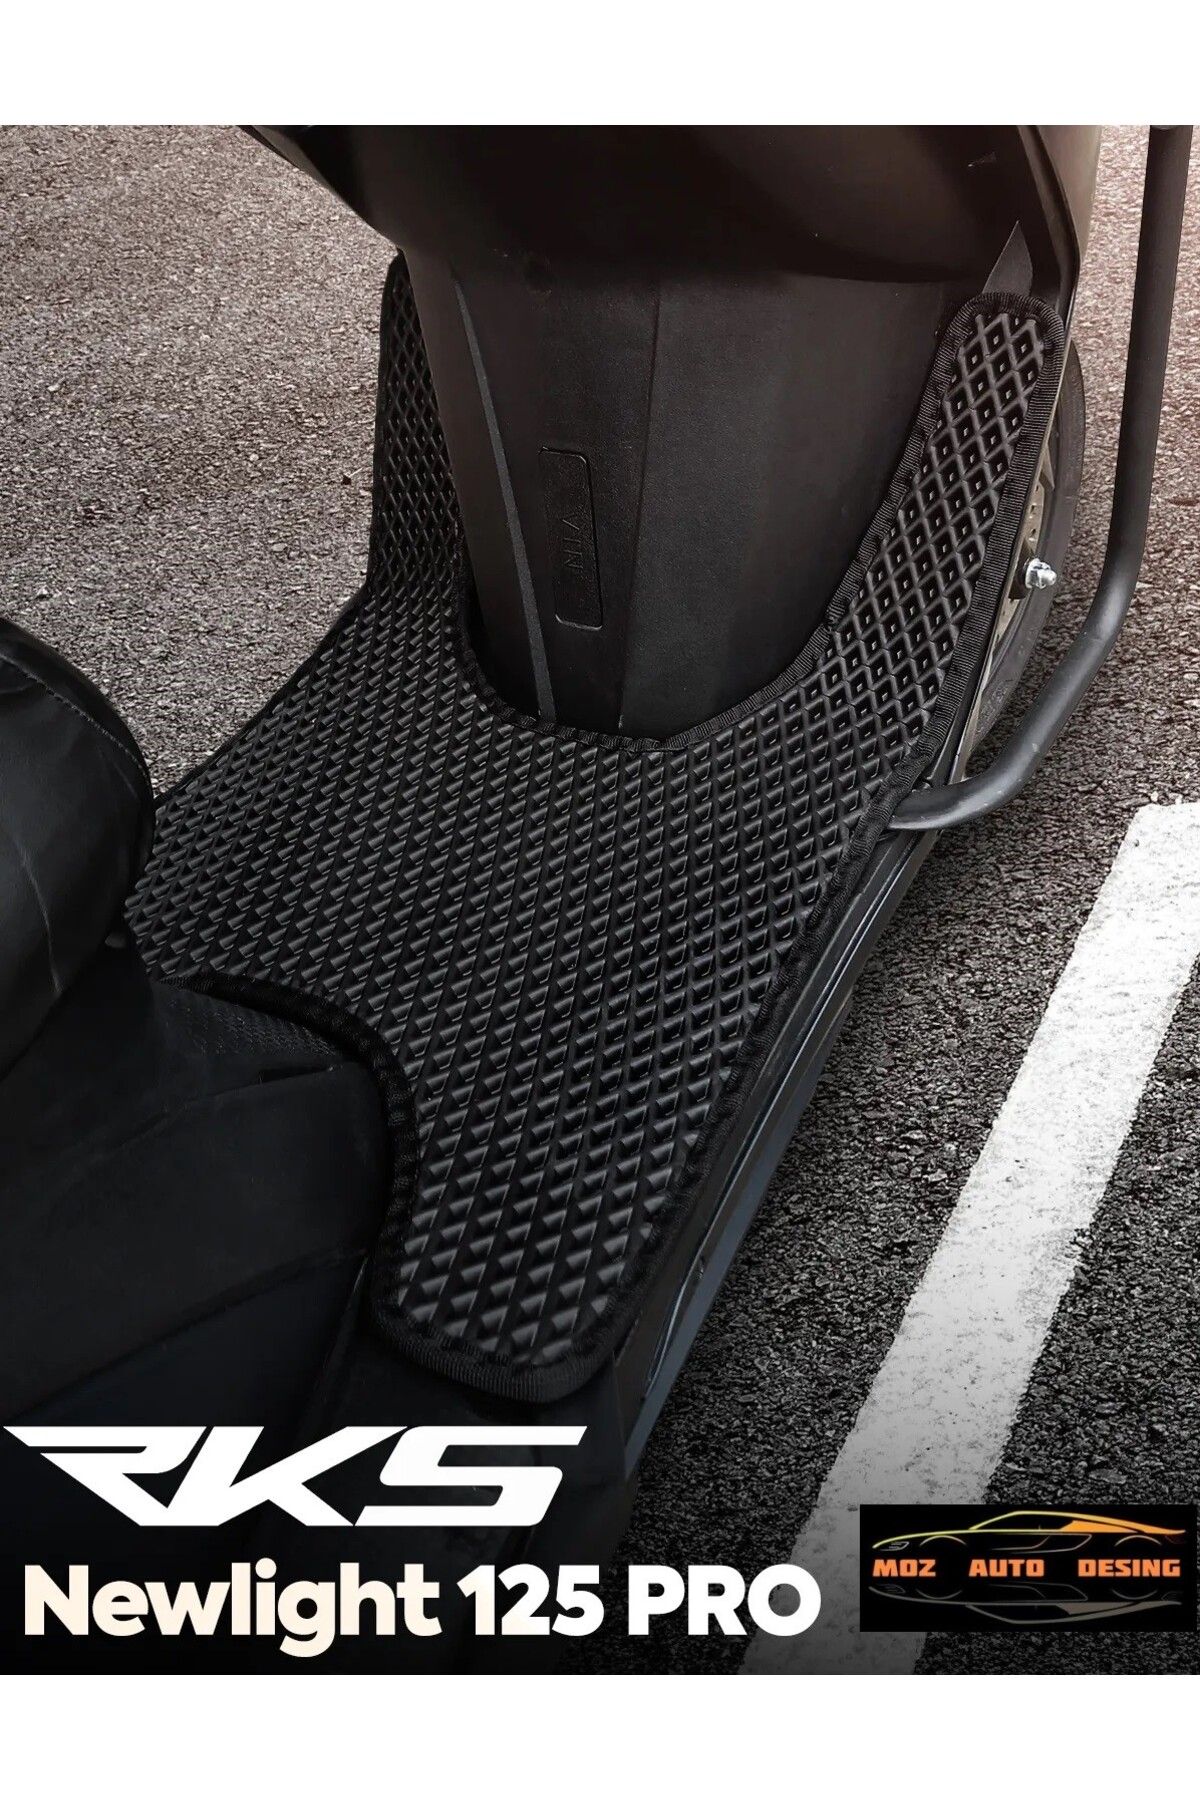 CEMREMS MOZ AutoDesing RKS Newlight 125-125 Pro Premium Eva Uyumlu Motosiklet Paspası - Siyah